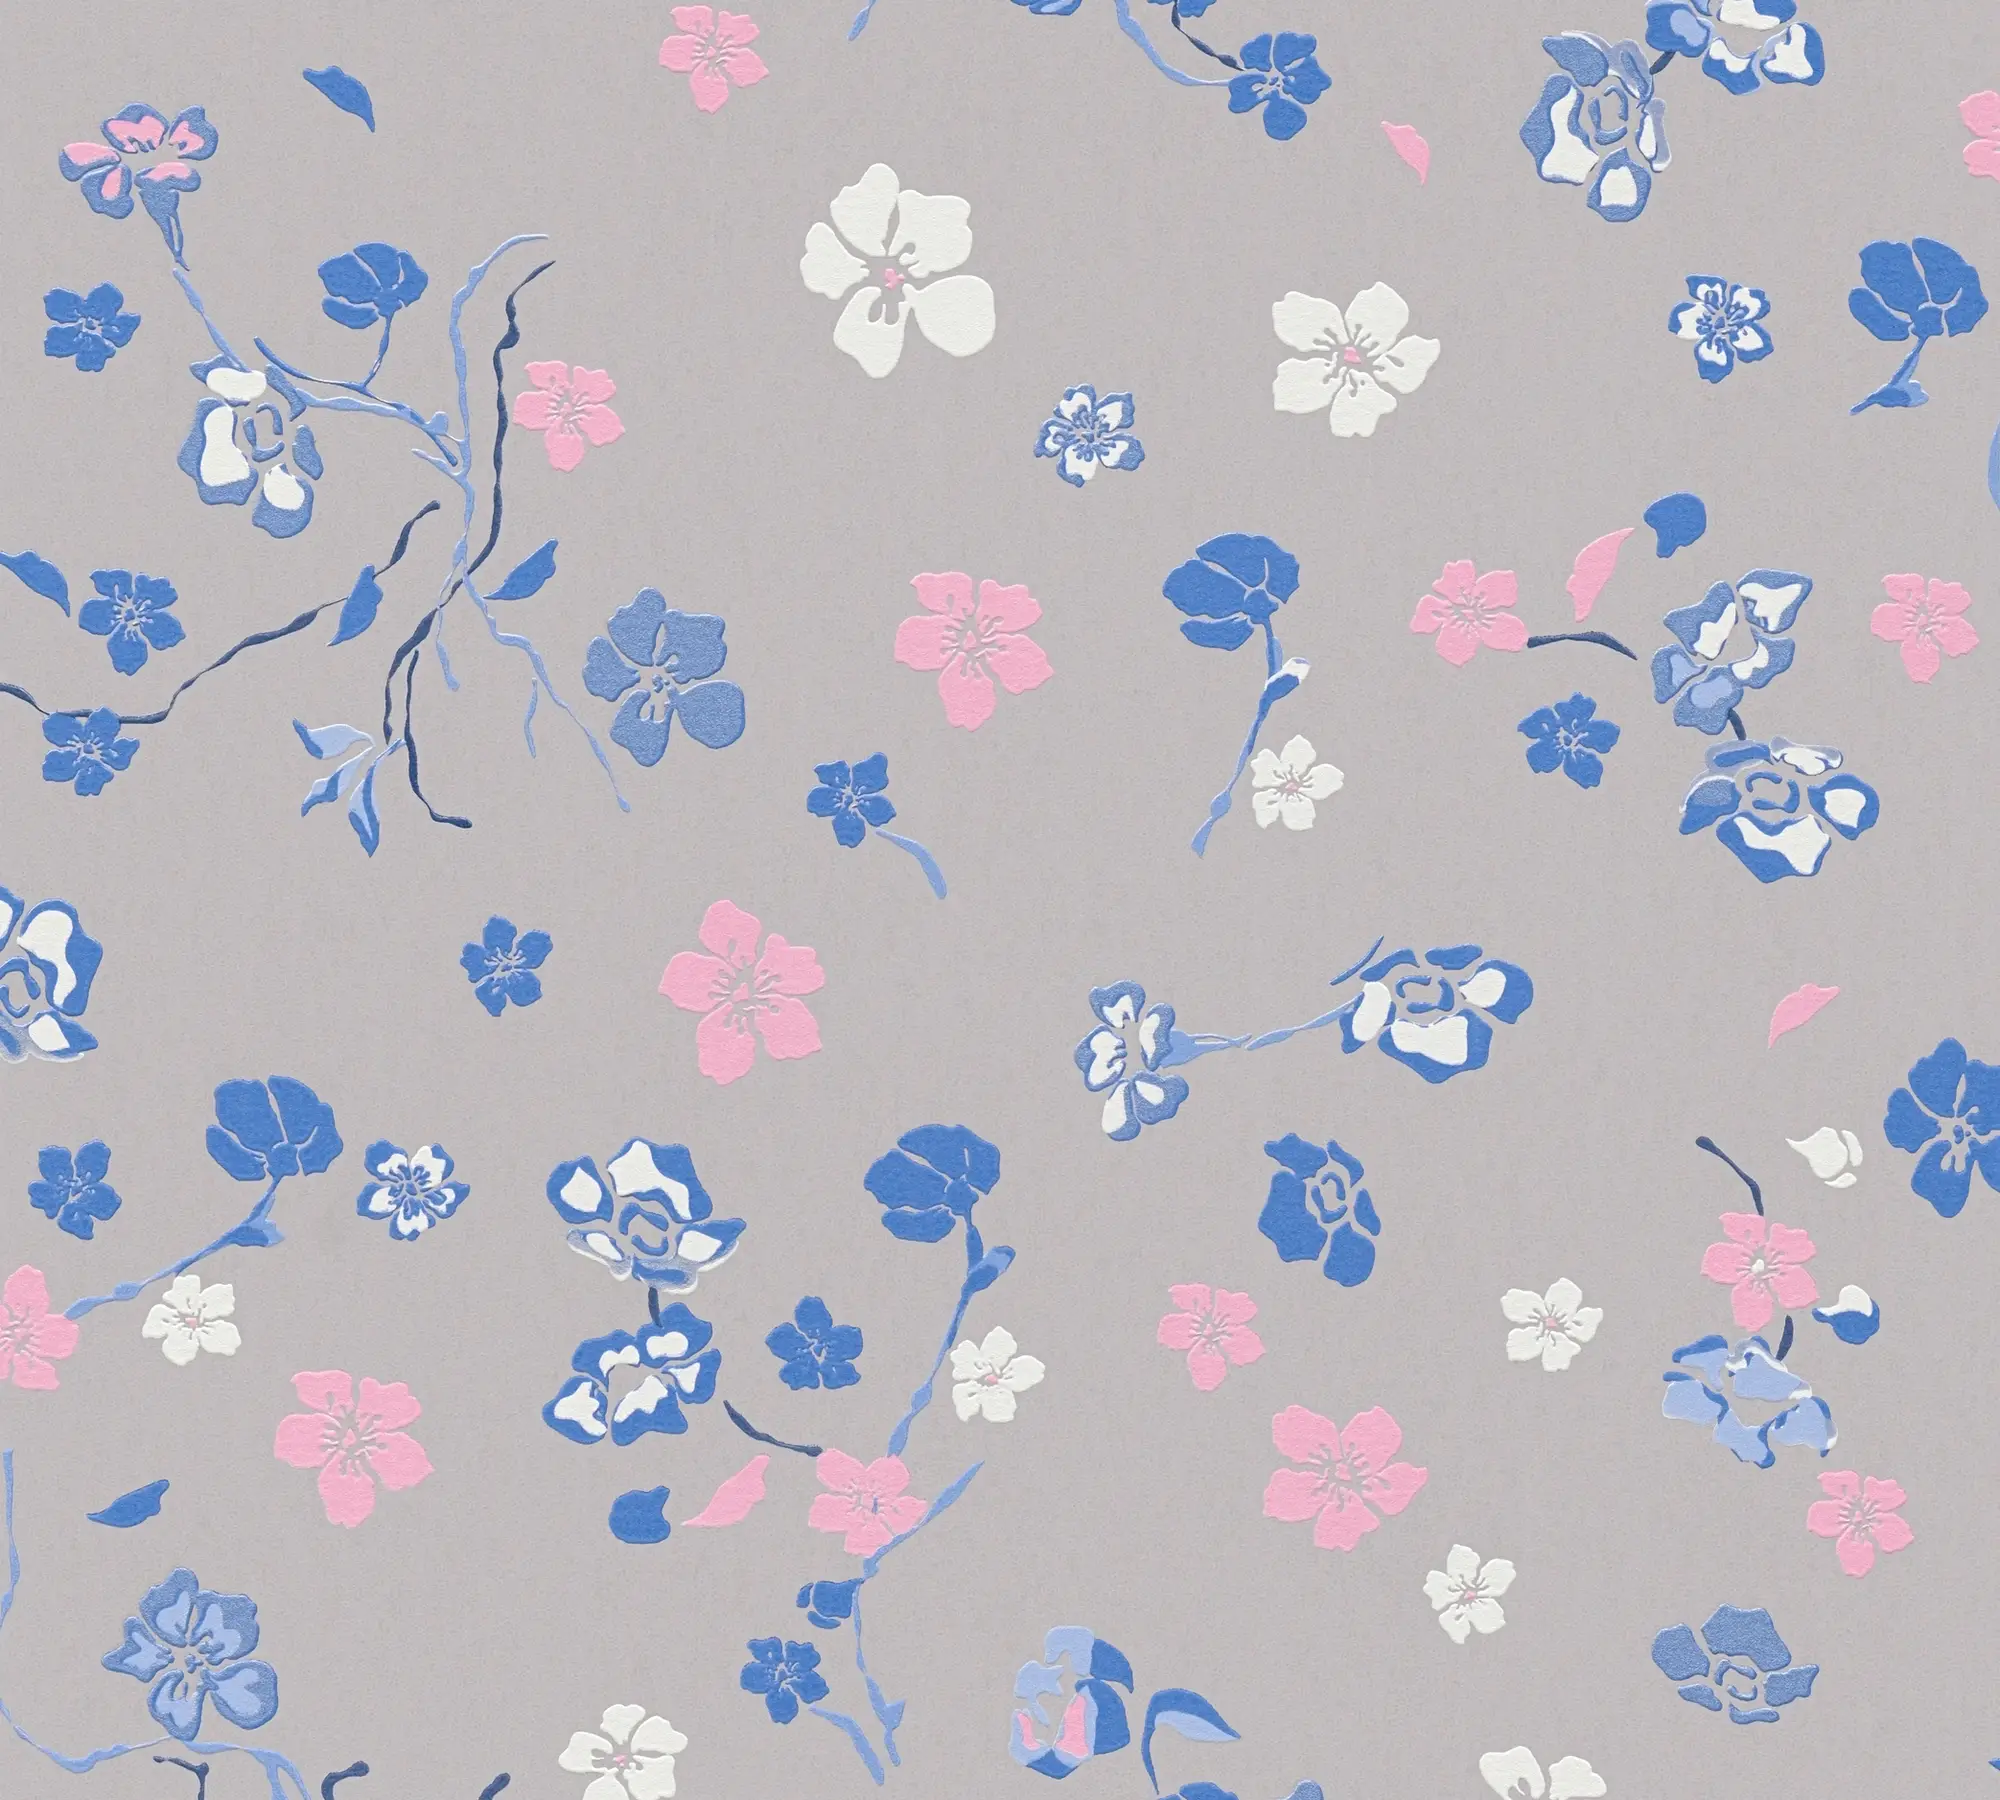 Floral Vliestapete Blau Grau Wei脽 Rosa